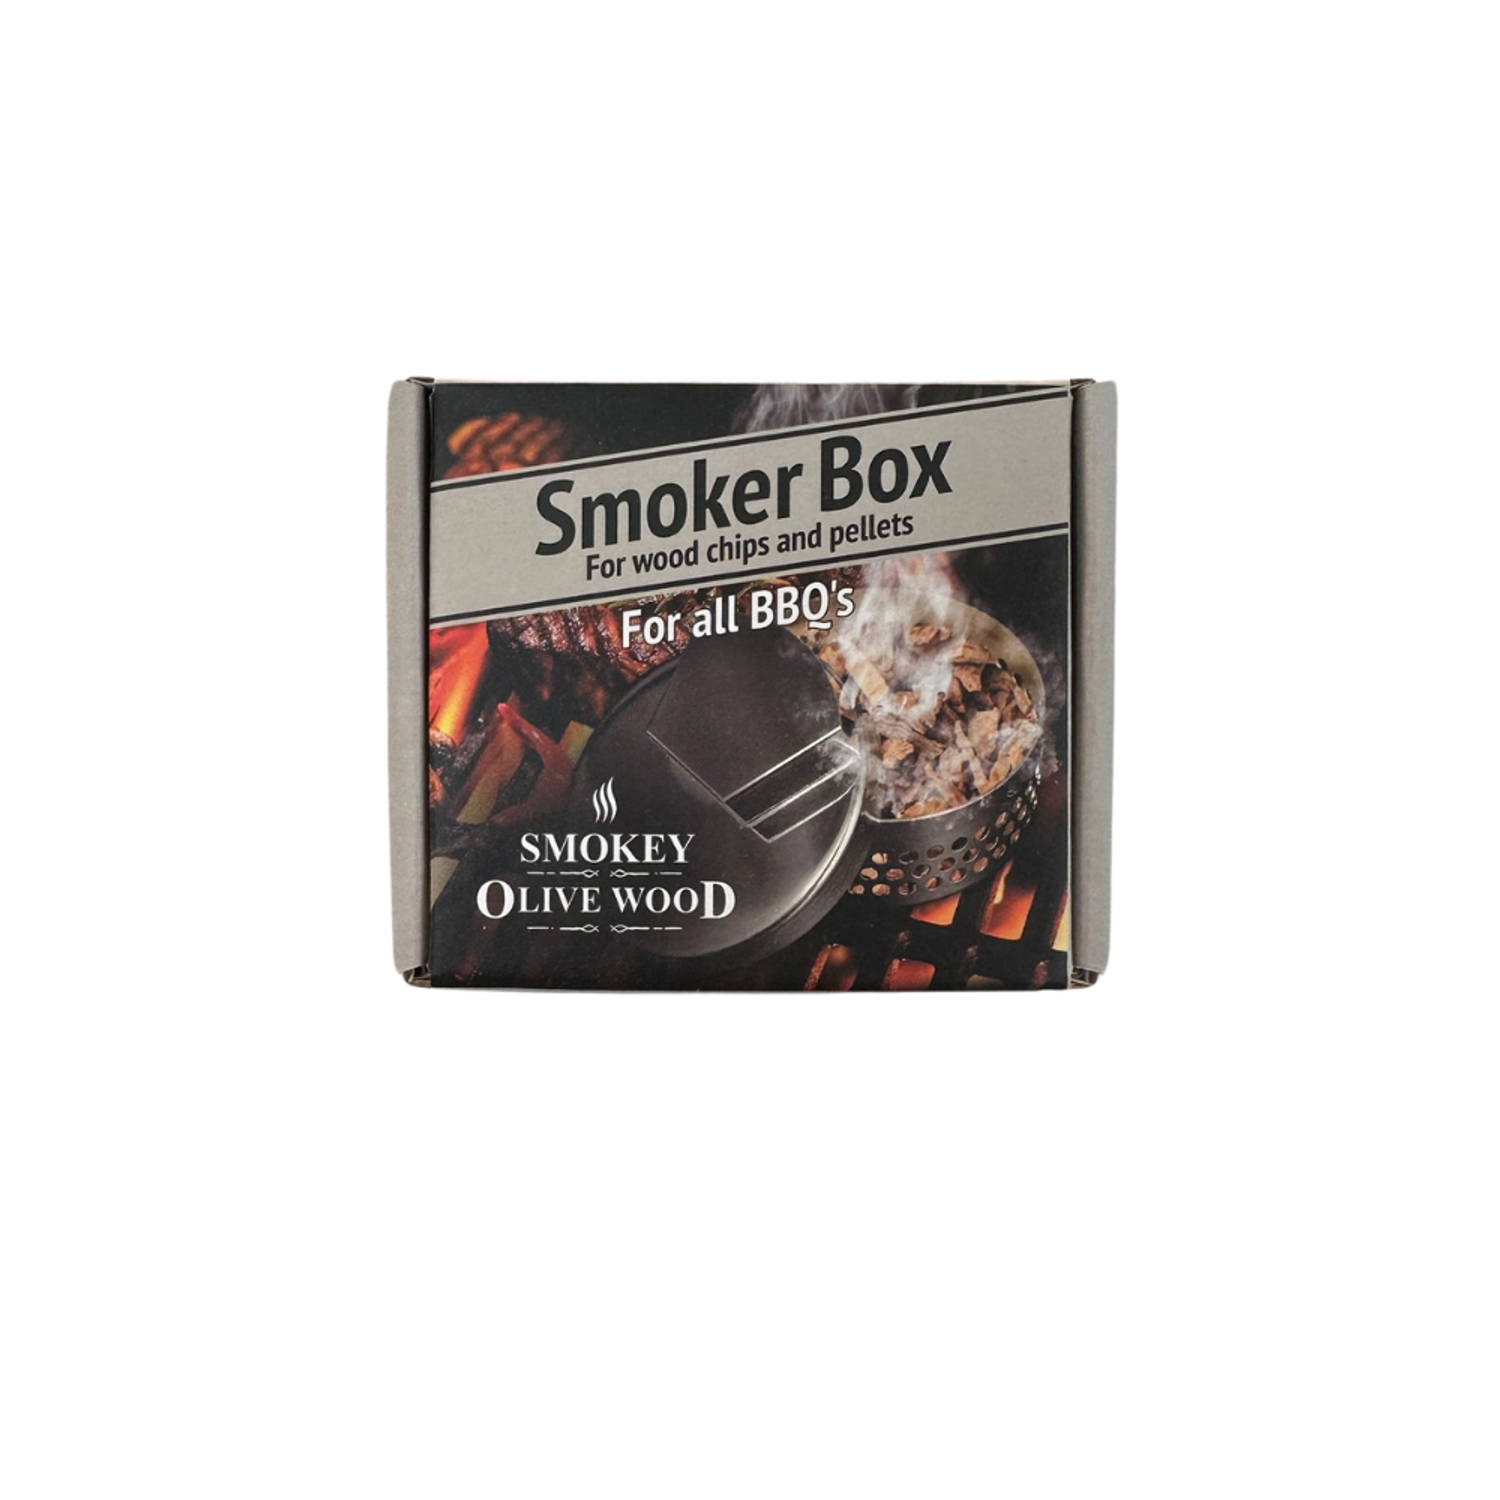 Smoker box - Perfect om jouw rookhout in te doen - Compact formaat - BBQ smoker box - BBQ smoke box - Original